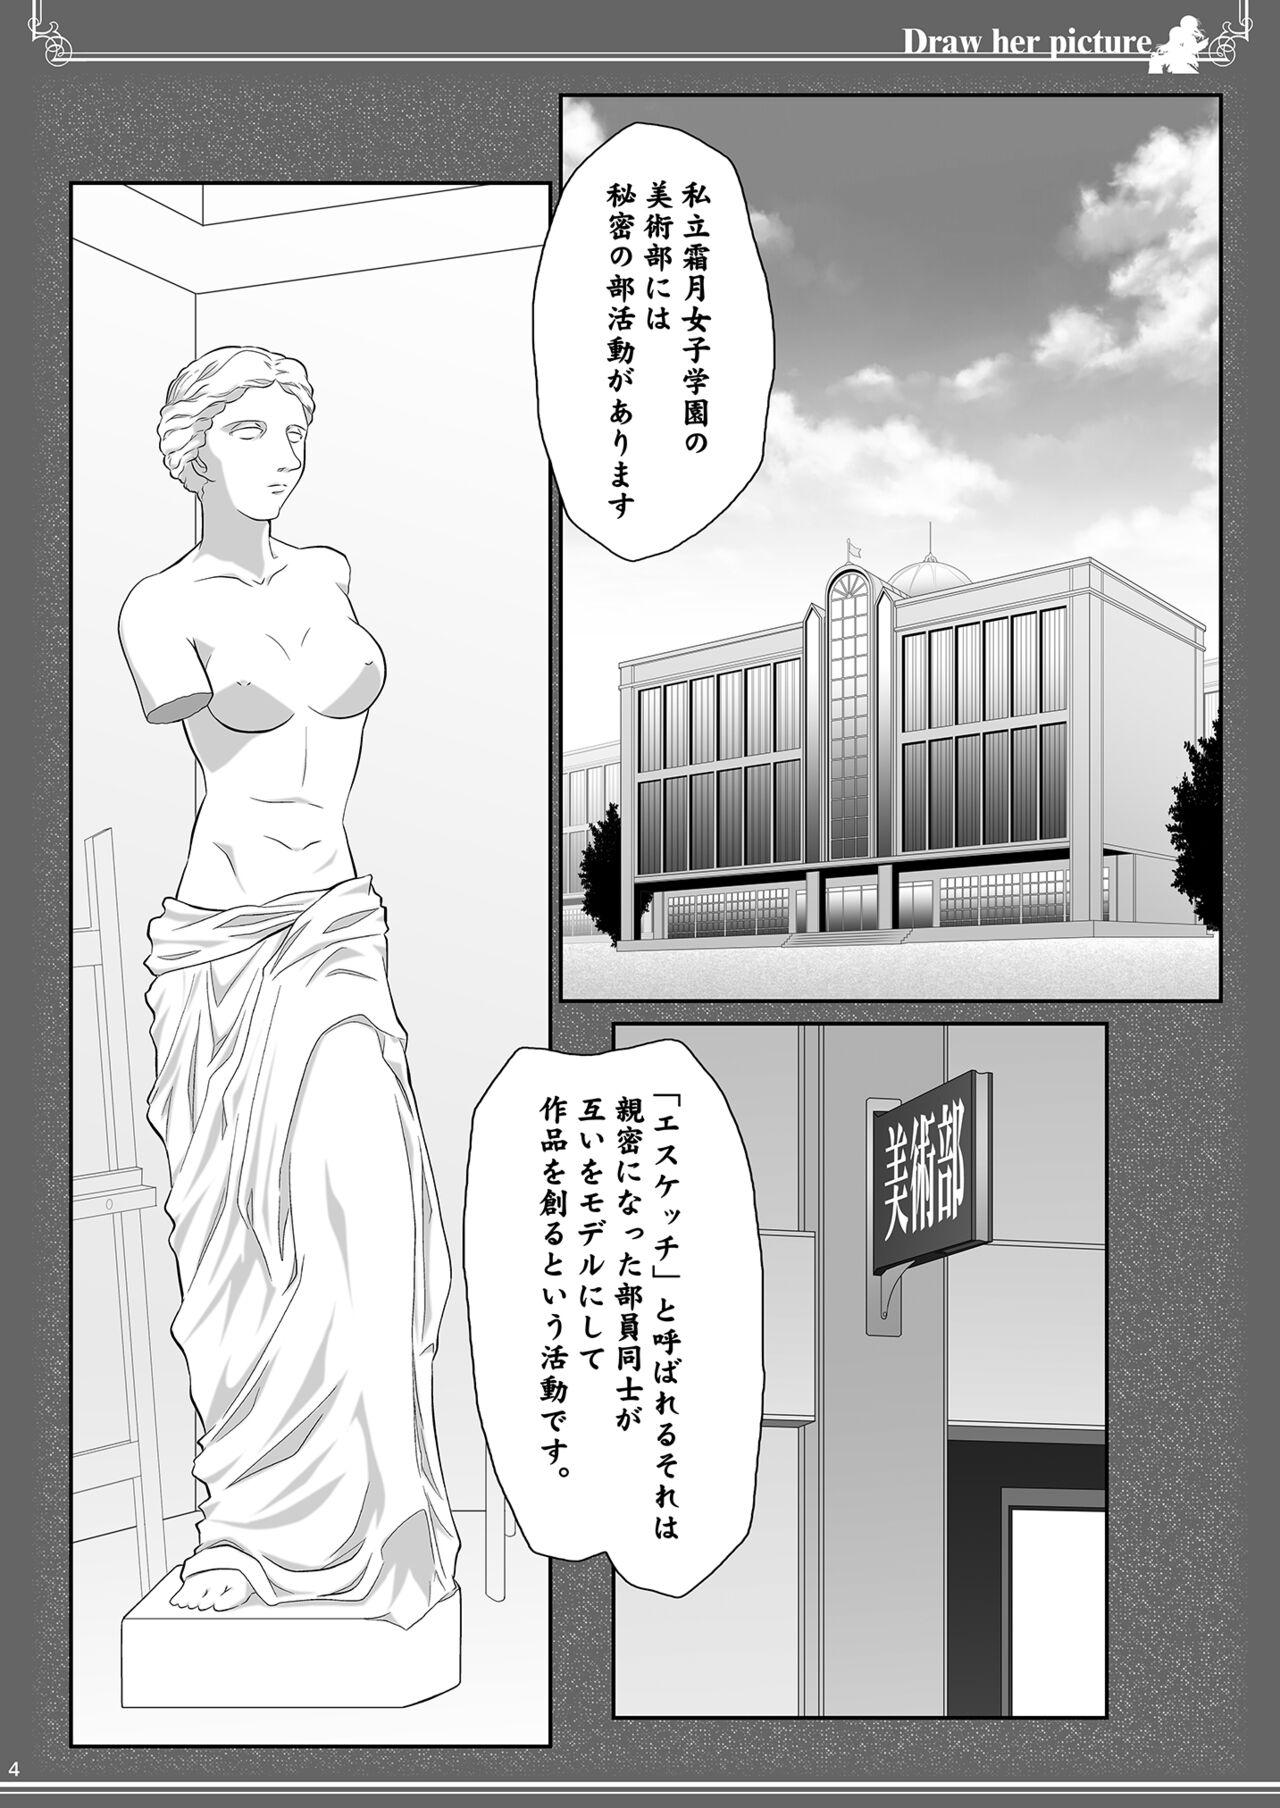 Sixtynine 貴女を描く アユミとイクエのエスケッチ - Original Lingerie - Page 4